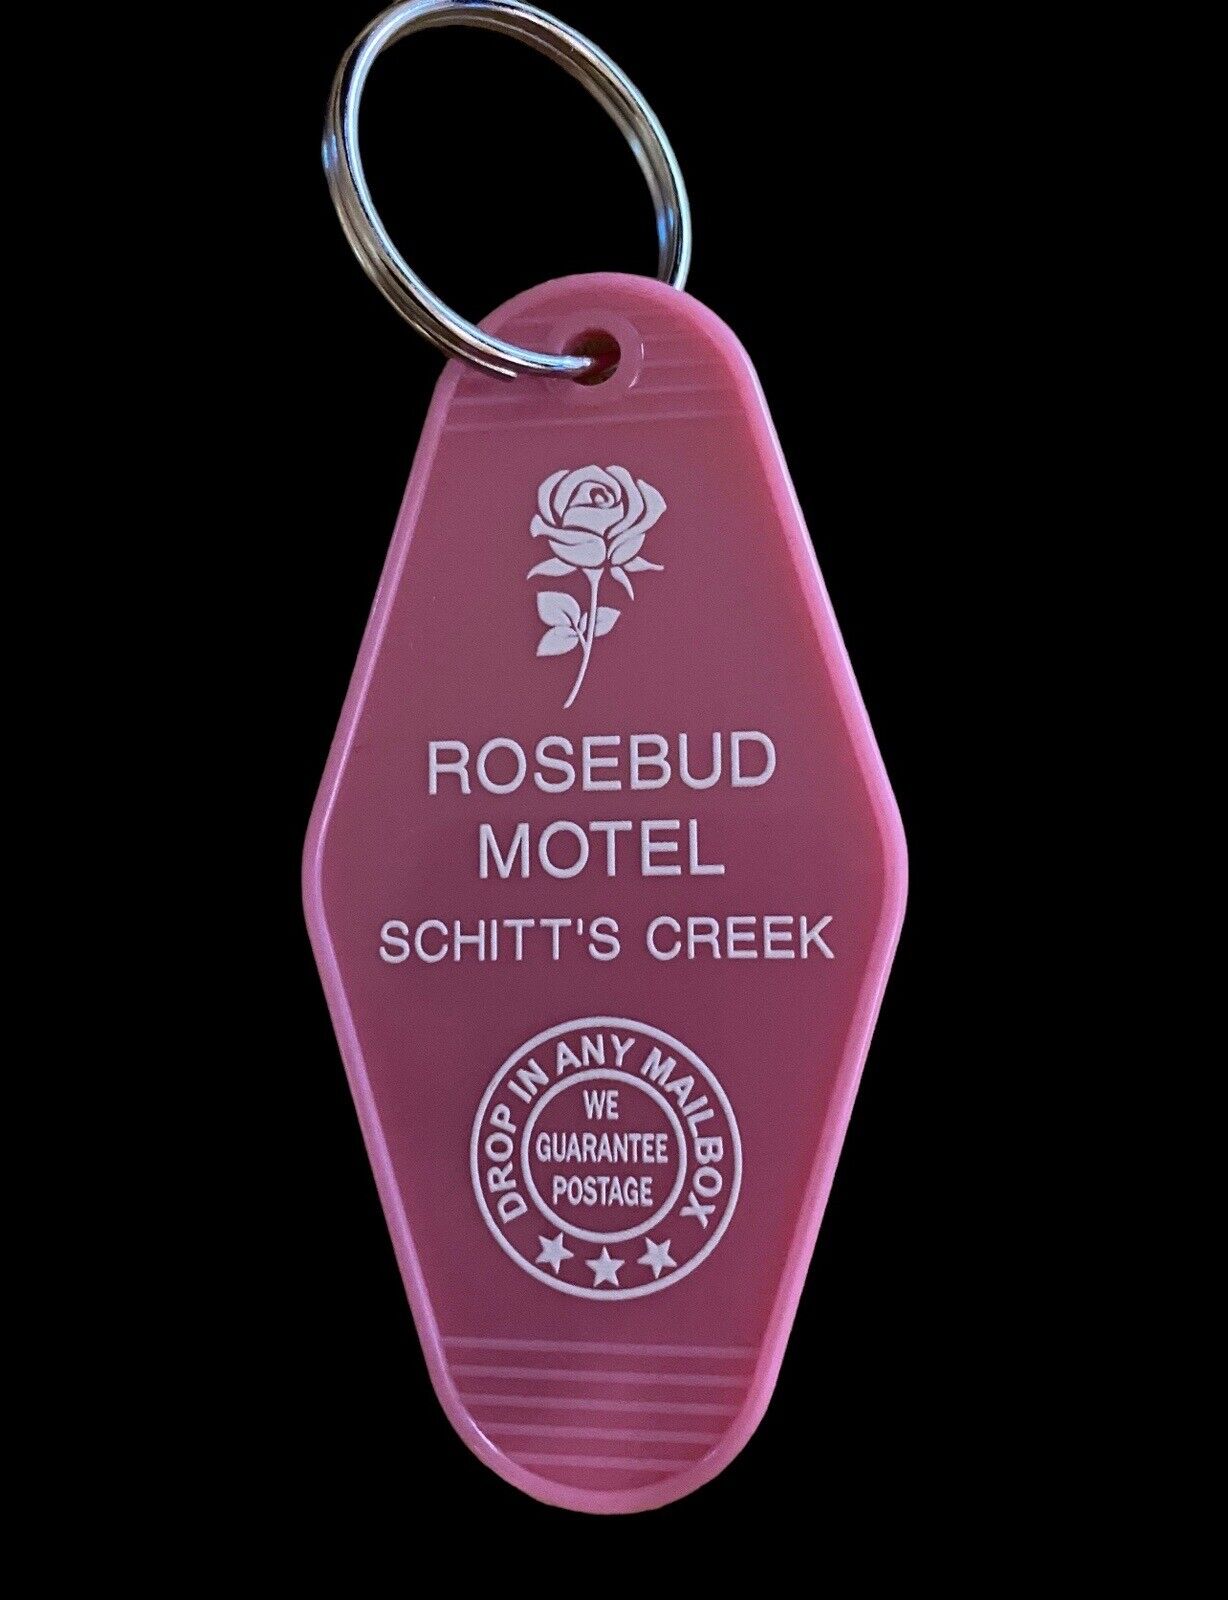 On sale PINK Schitt’s Creek inspired Rosebud motel keytag